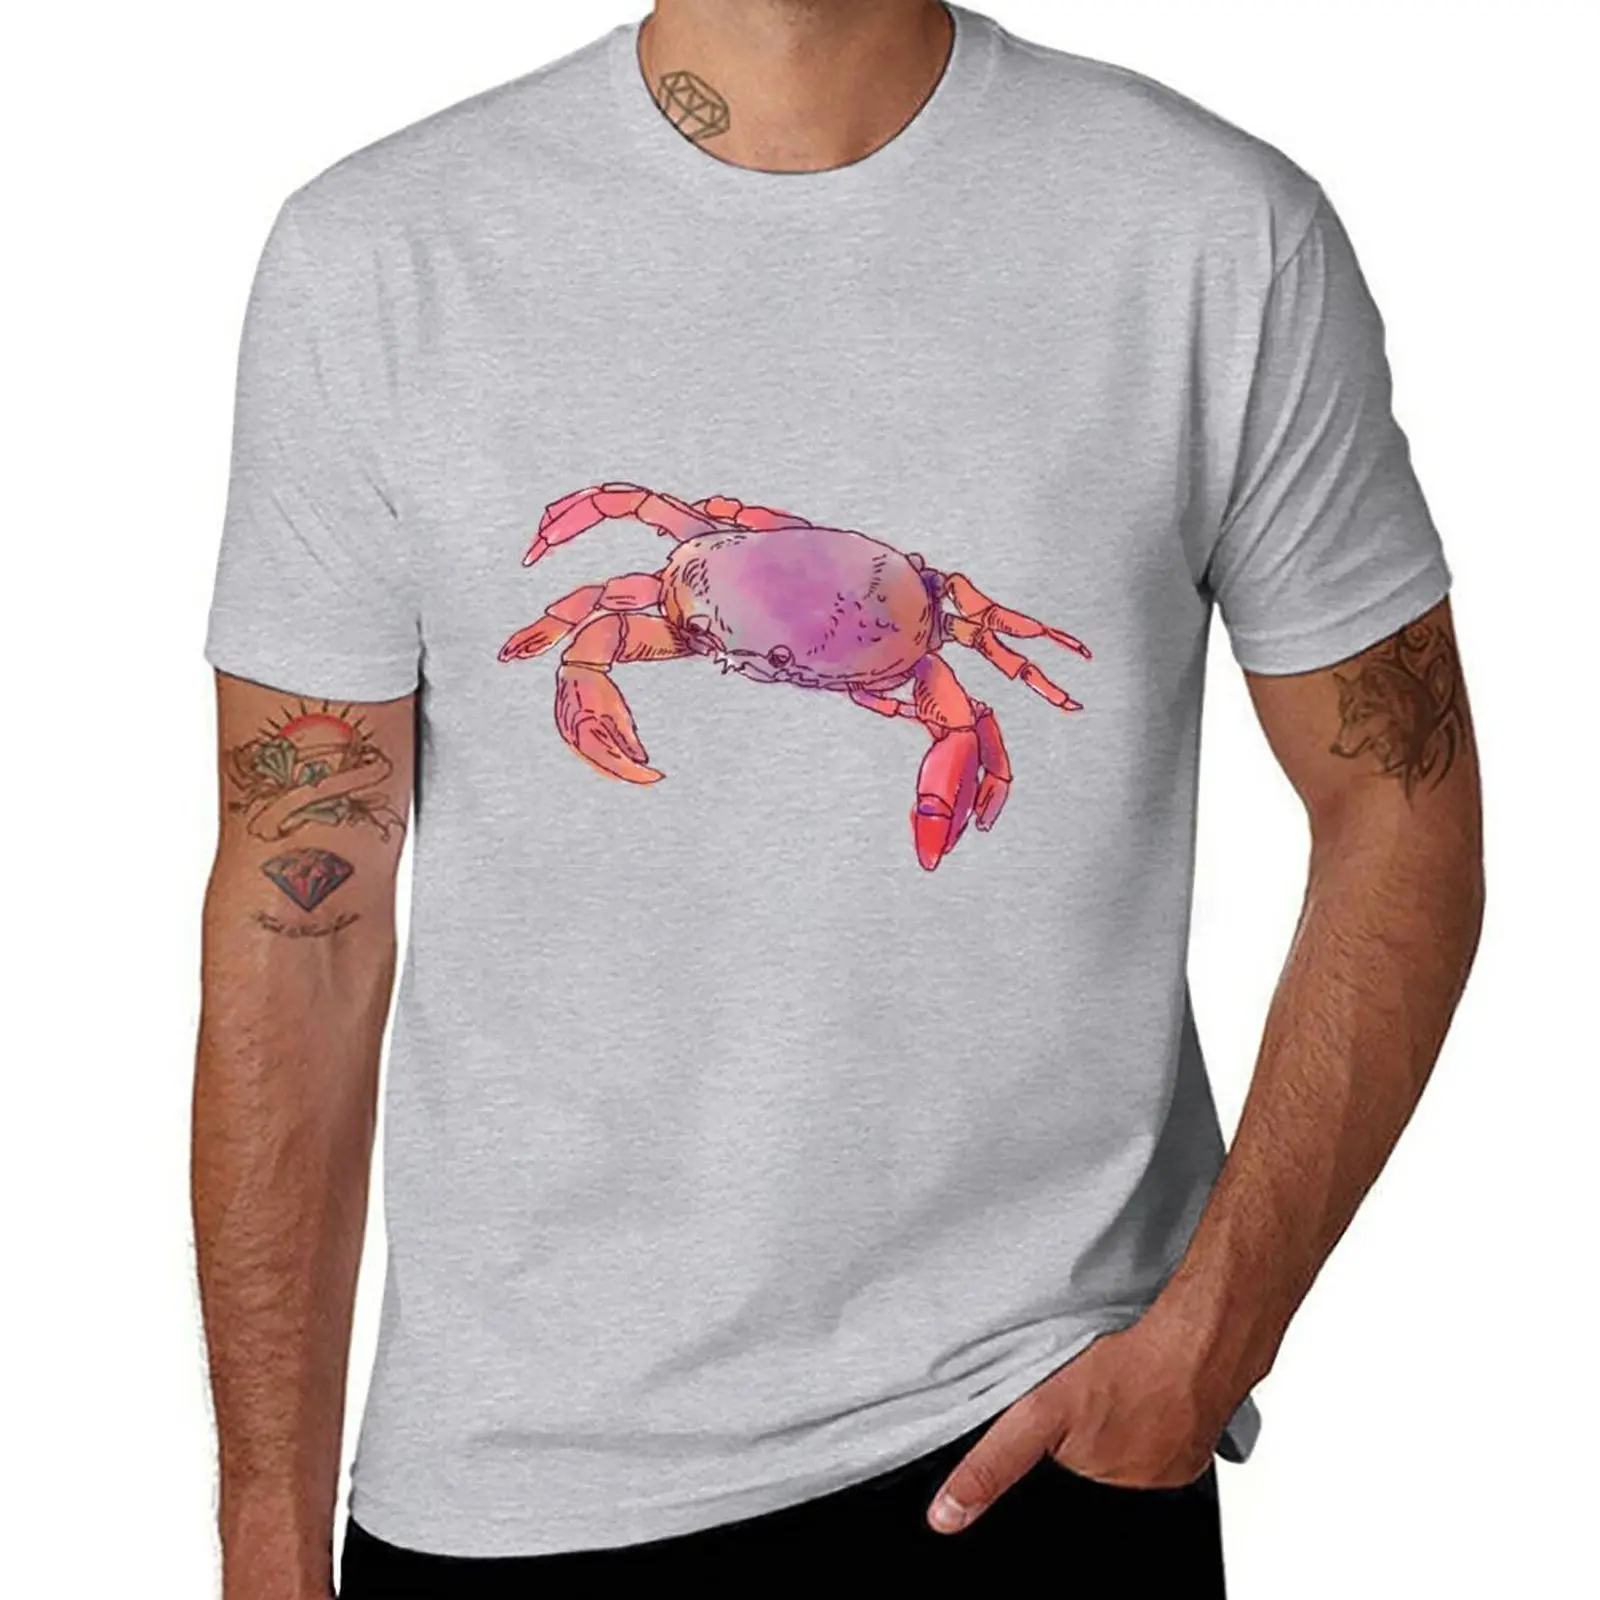 New Sydney the Crab T-Shirt Tee shirt boys animal print shirt T-shirt for a boy funny t shirts for men